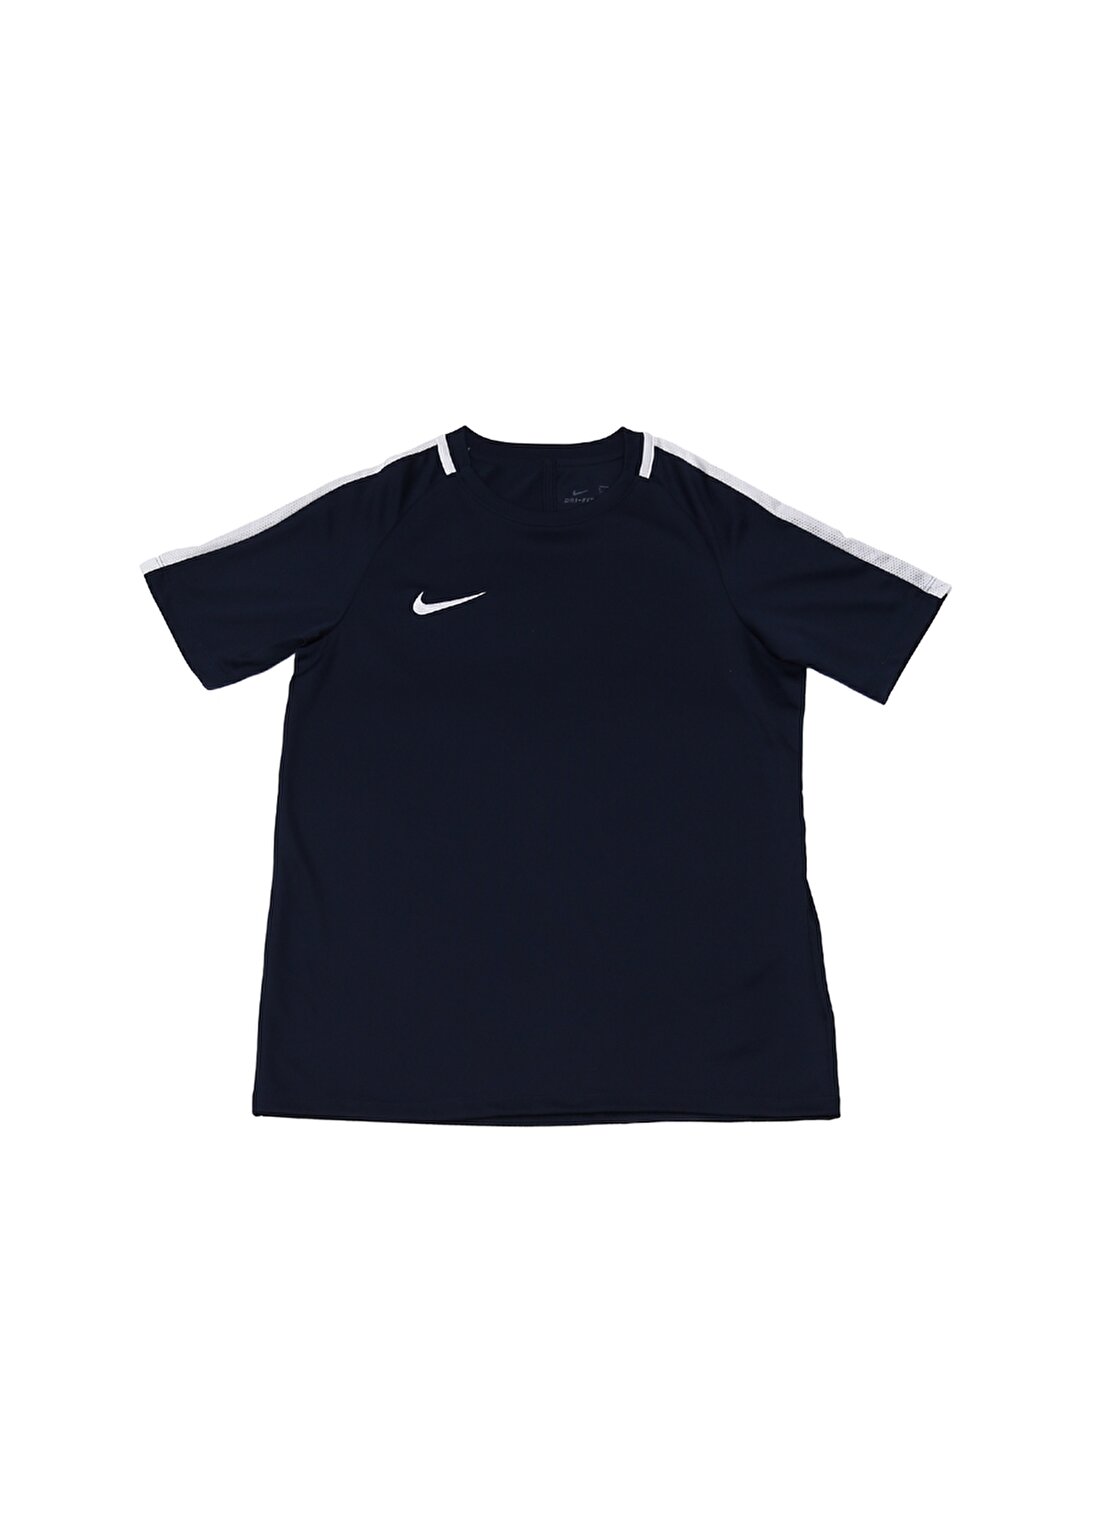 Nike Dry Academy Football T-Shirt